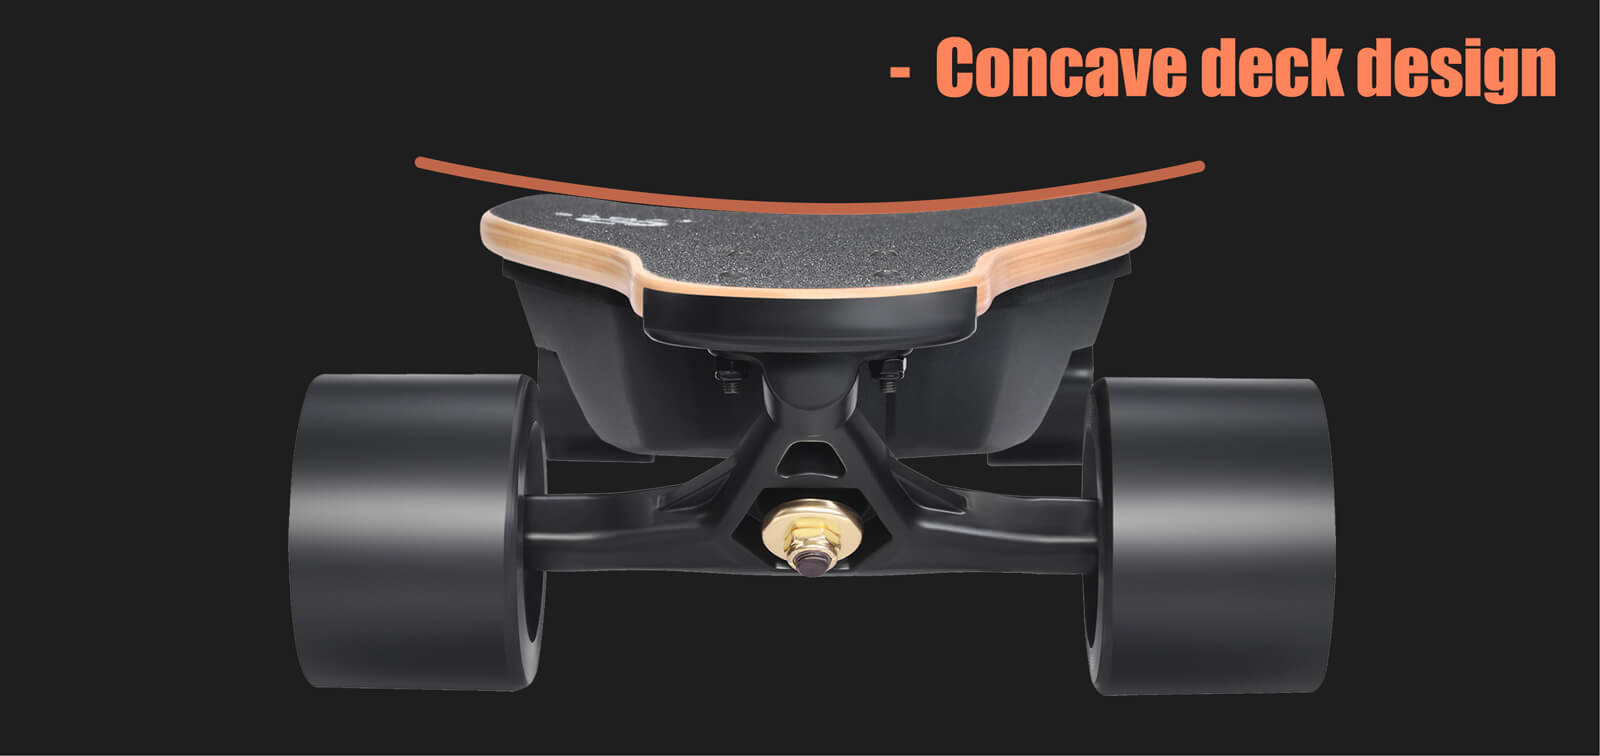 Tynee Ultra Electric skateboard concave deck